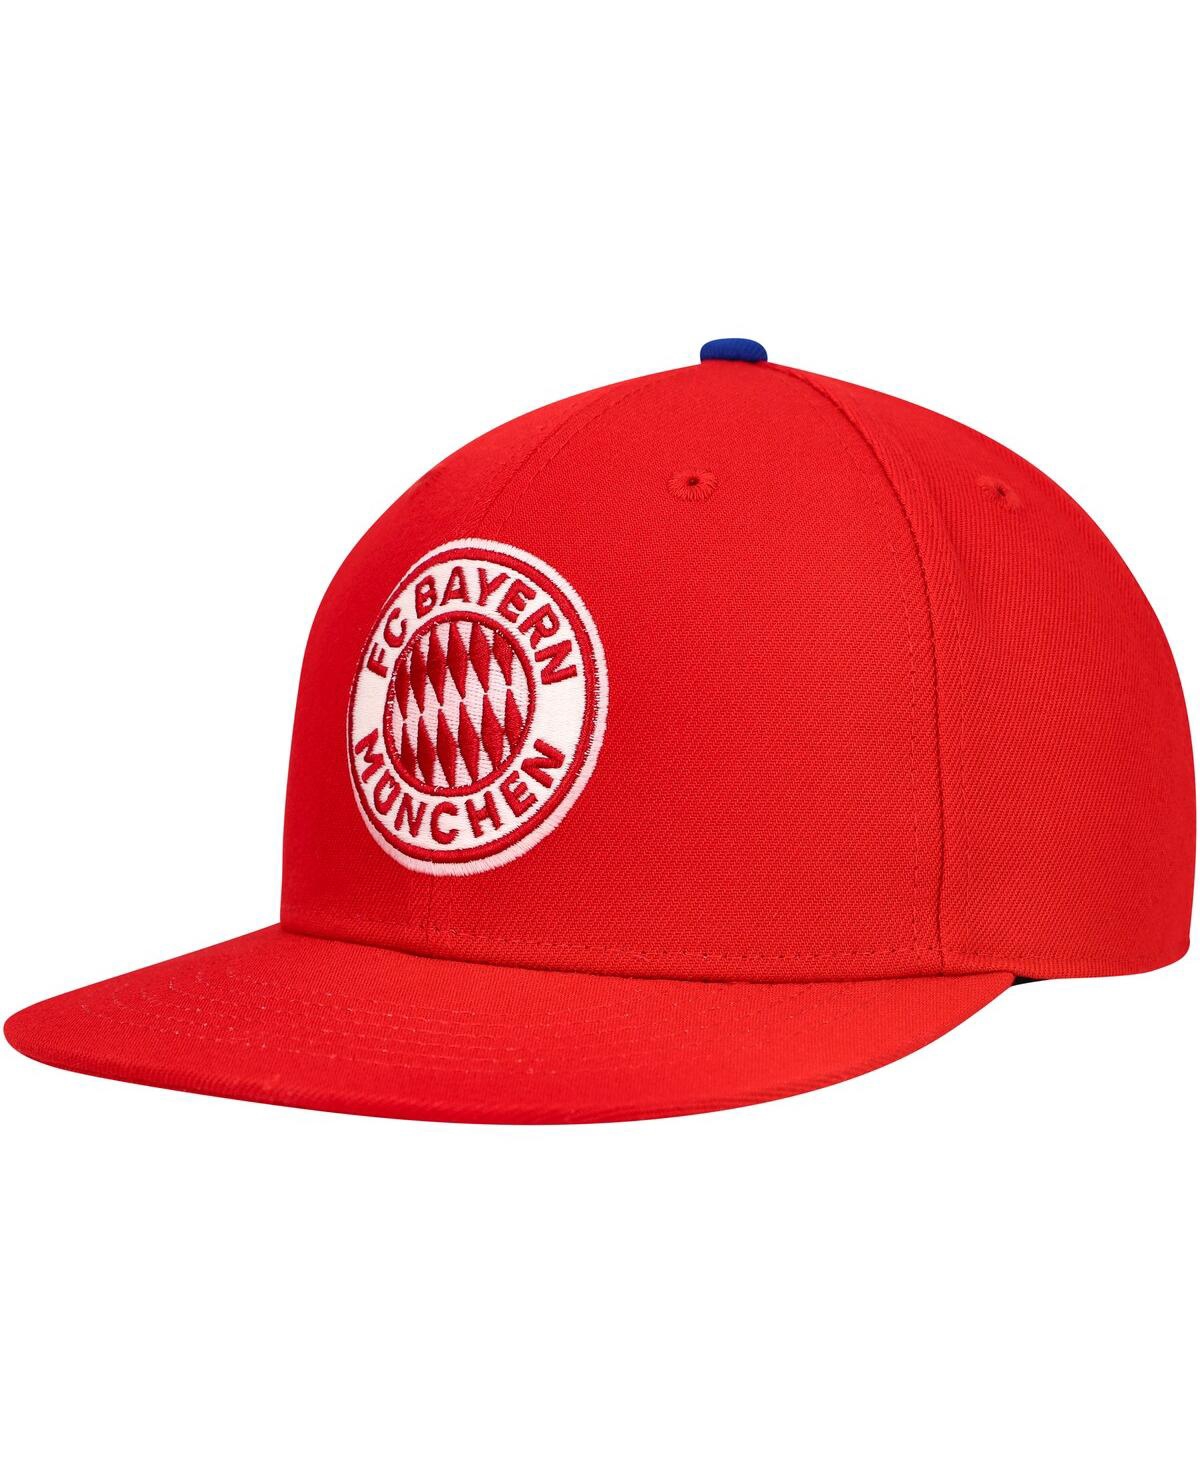 Men's Scarlet Bayern Munich America's Game Snapback Hat - Scarlet